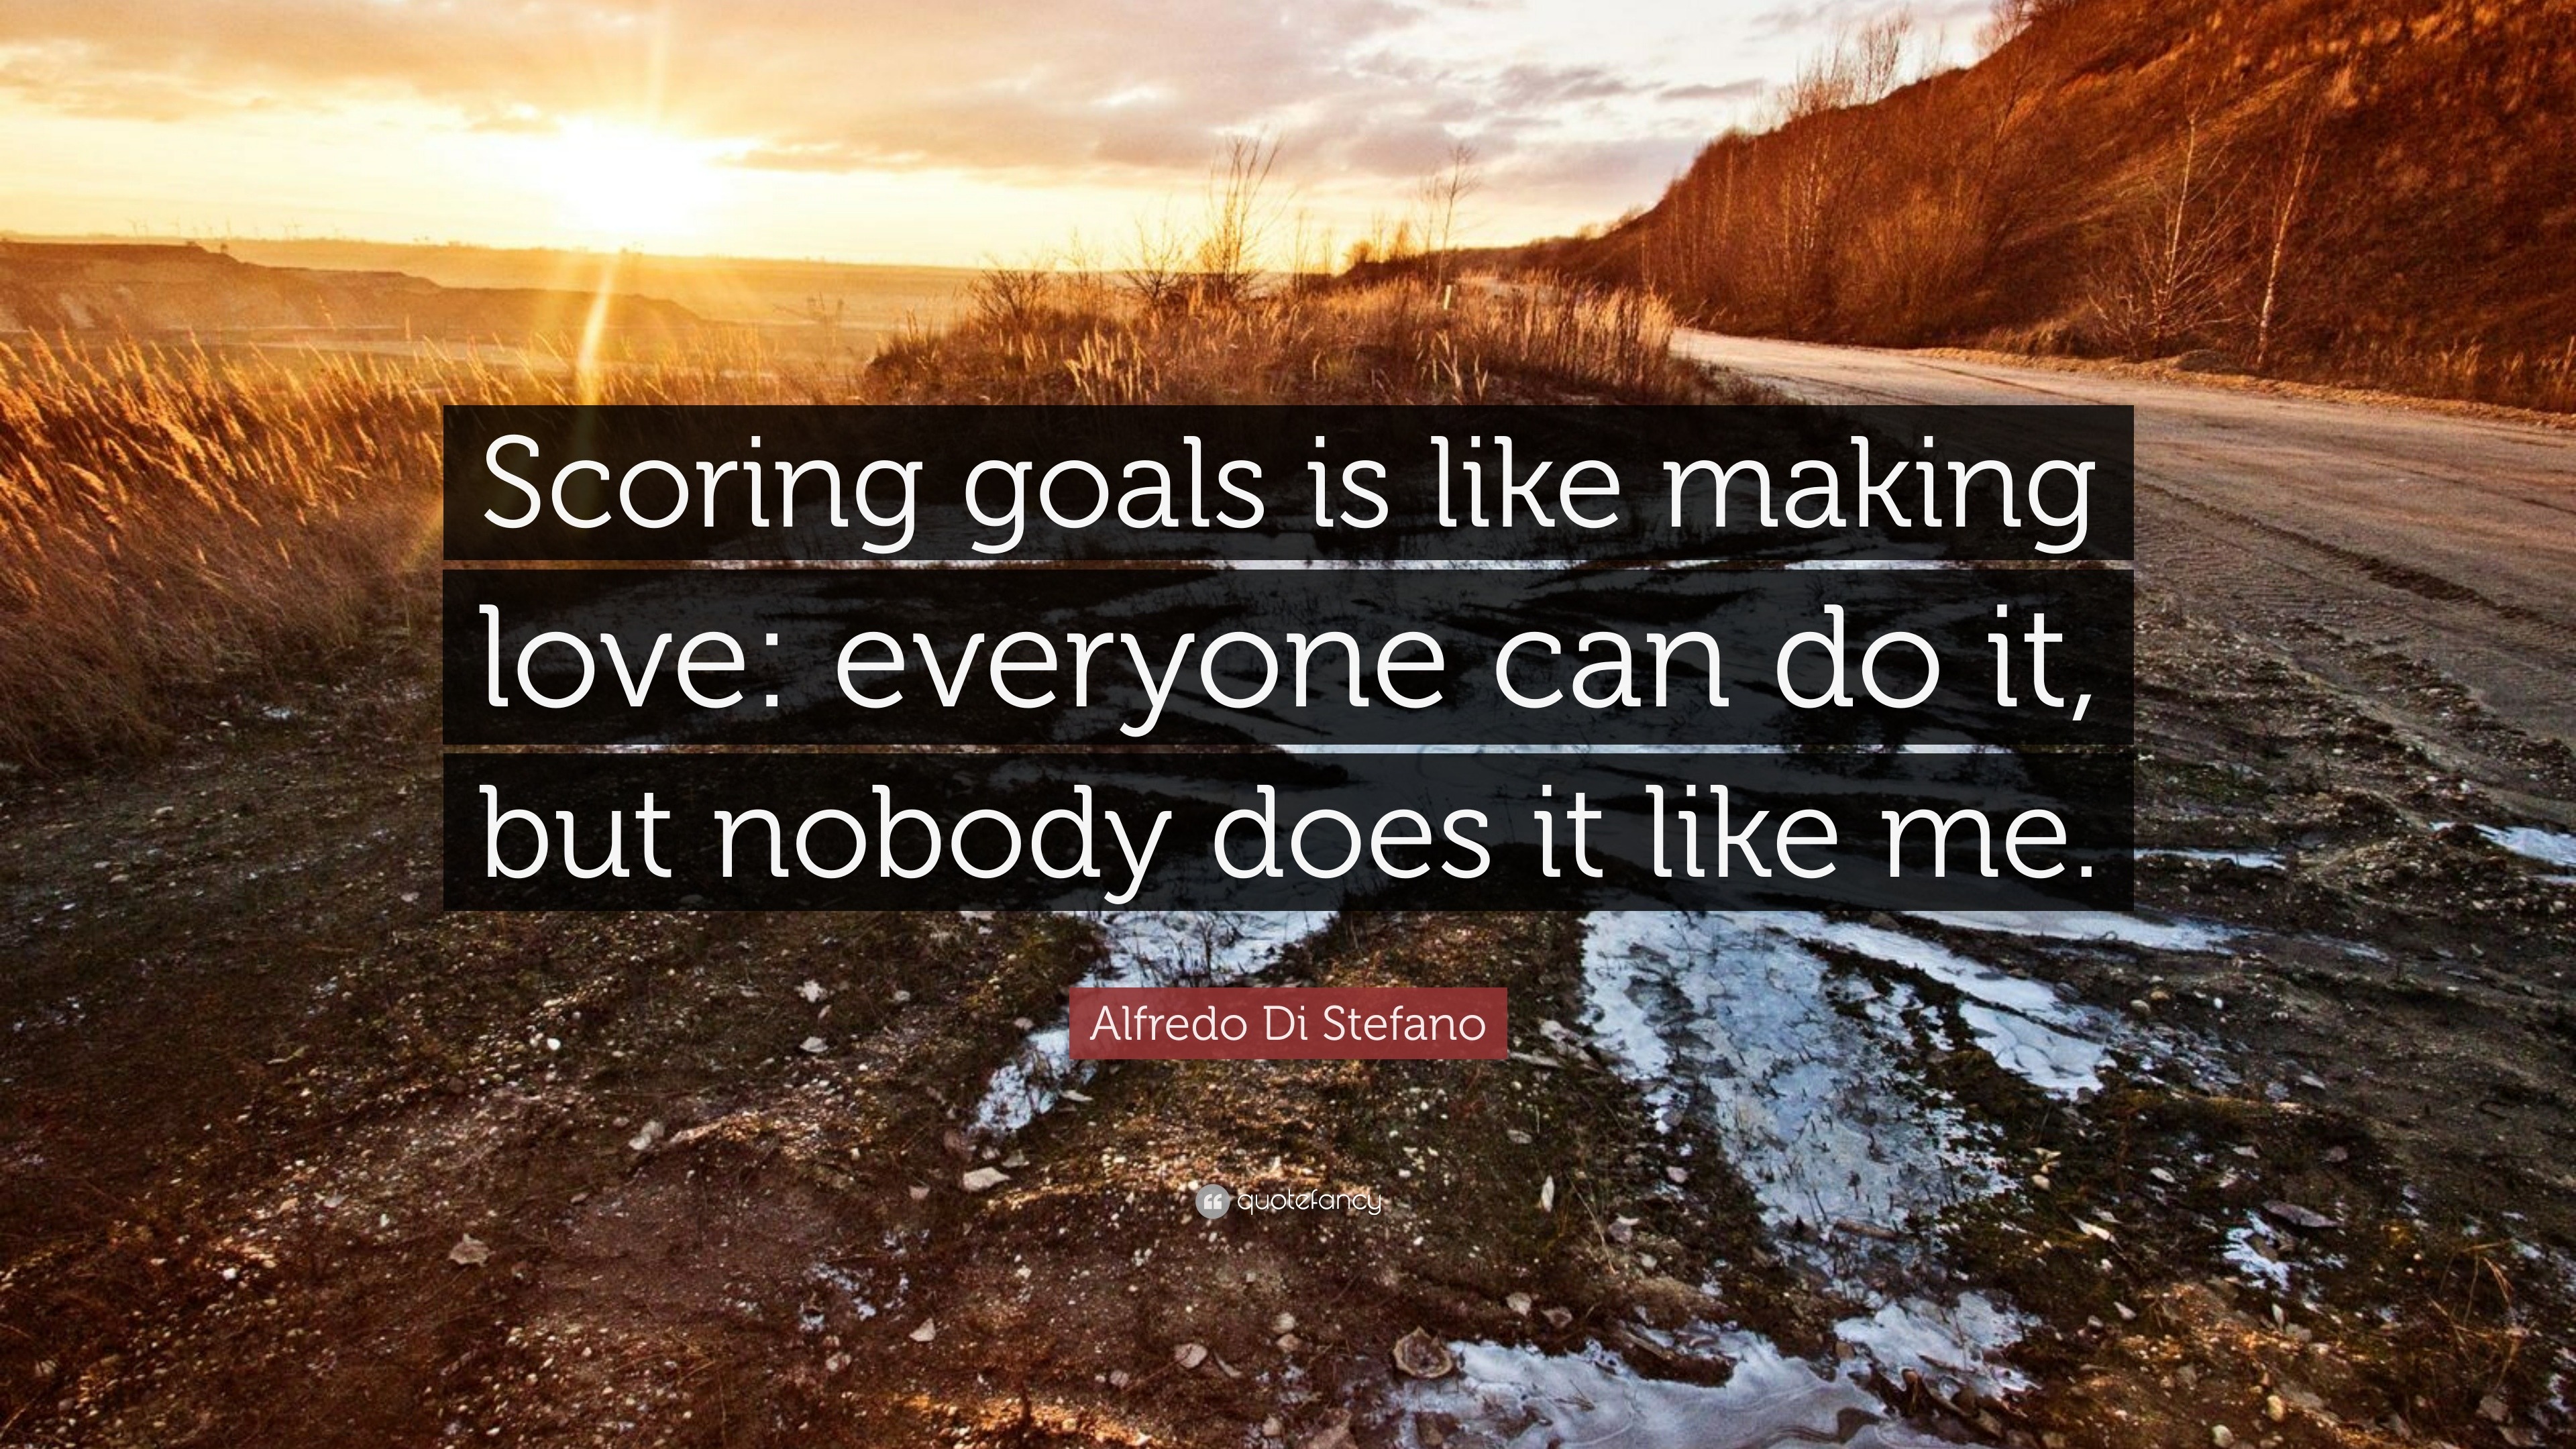 Alfredo Di Stefano Quote “Scoring goals is like making love everyone can do